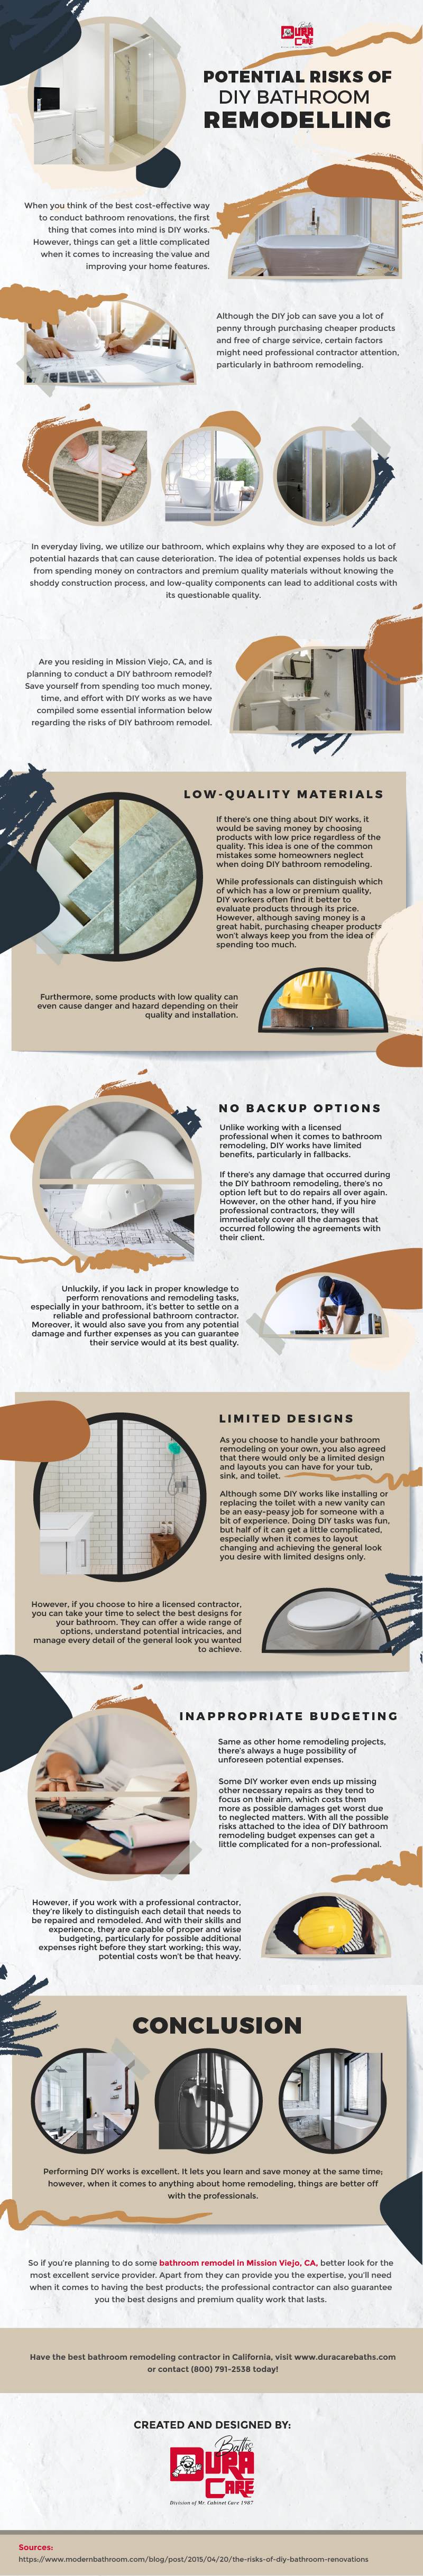 Potential Risks of DIY Bathroom Remodeling-01 infographic